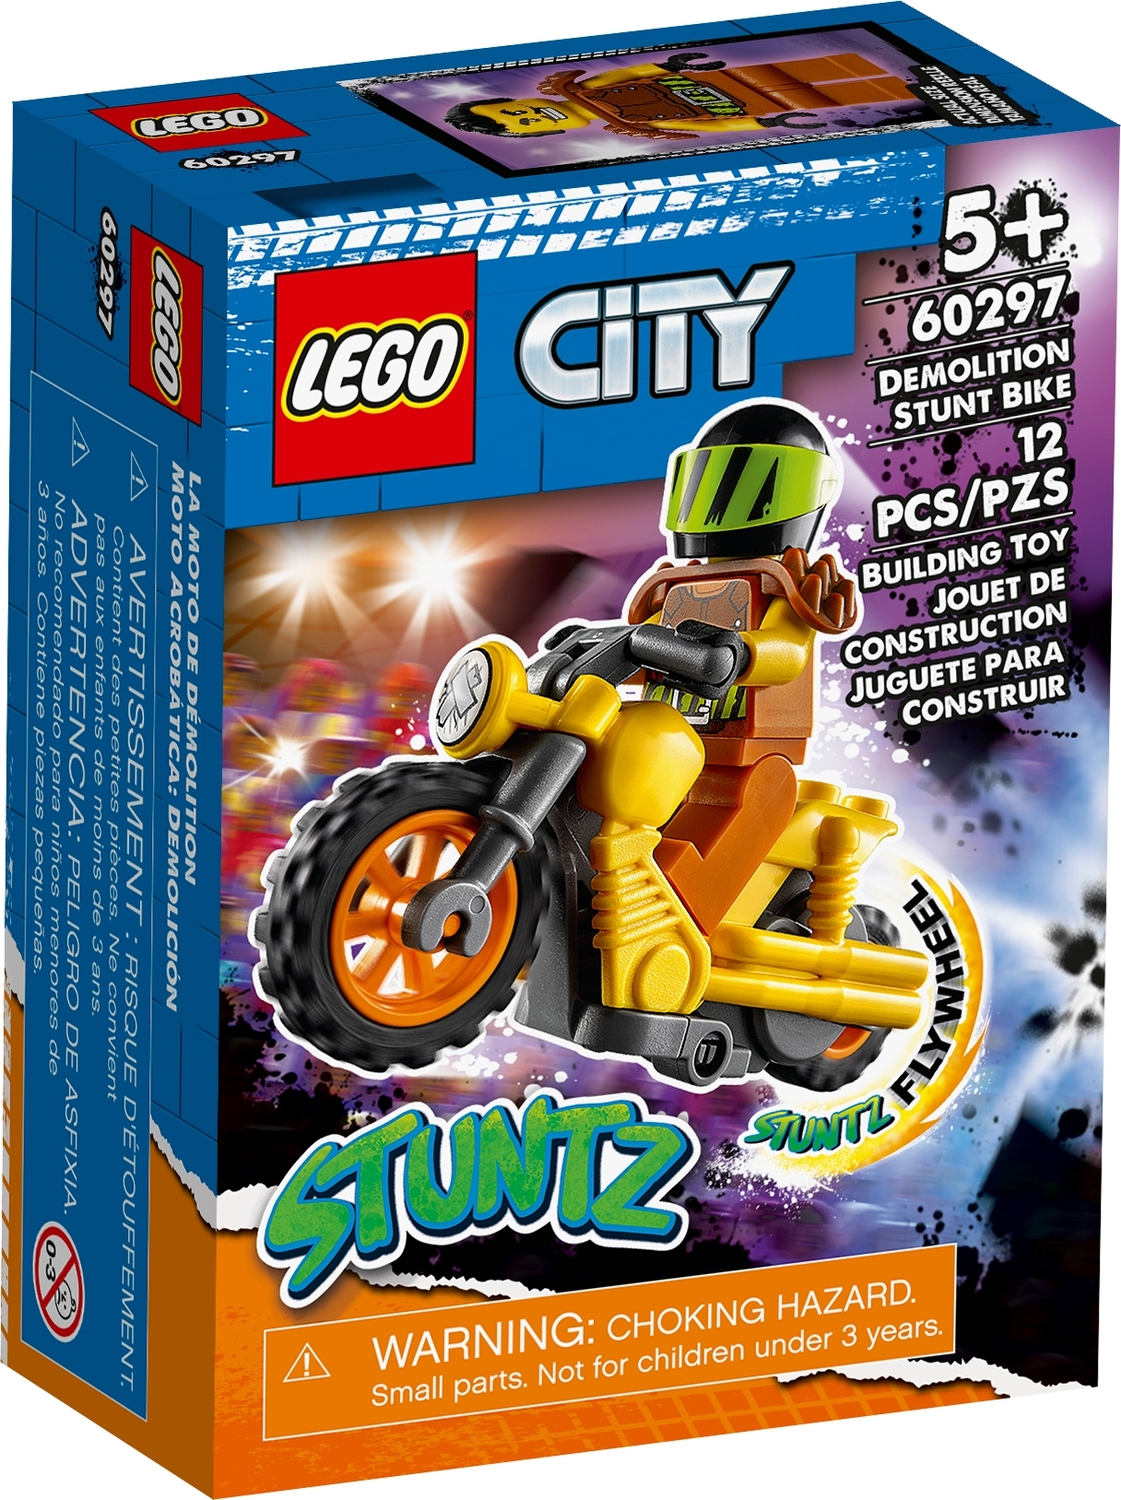 Kilimanjaro karakterisere Teasing LEGO City: Demolition Stunt Bike - Imagine That Toys